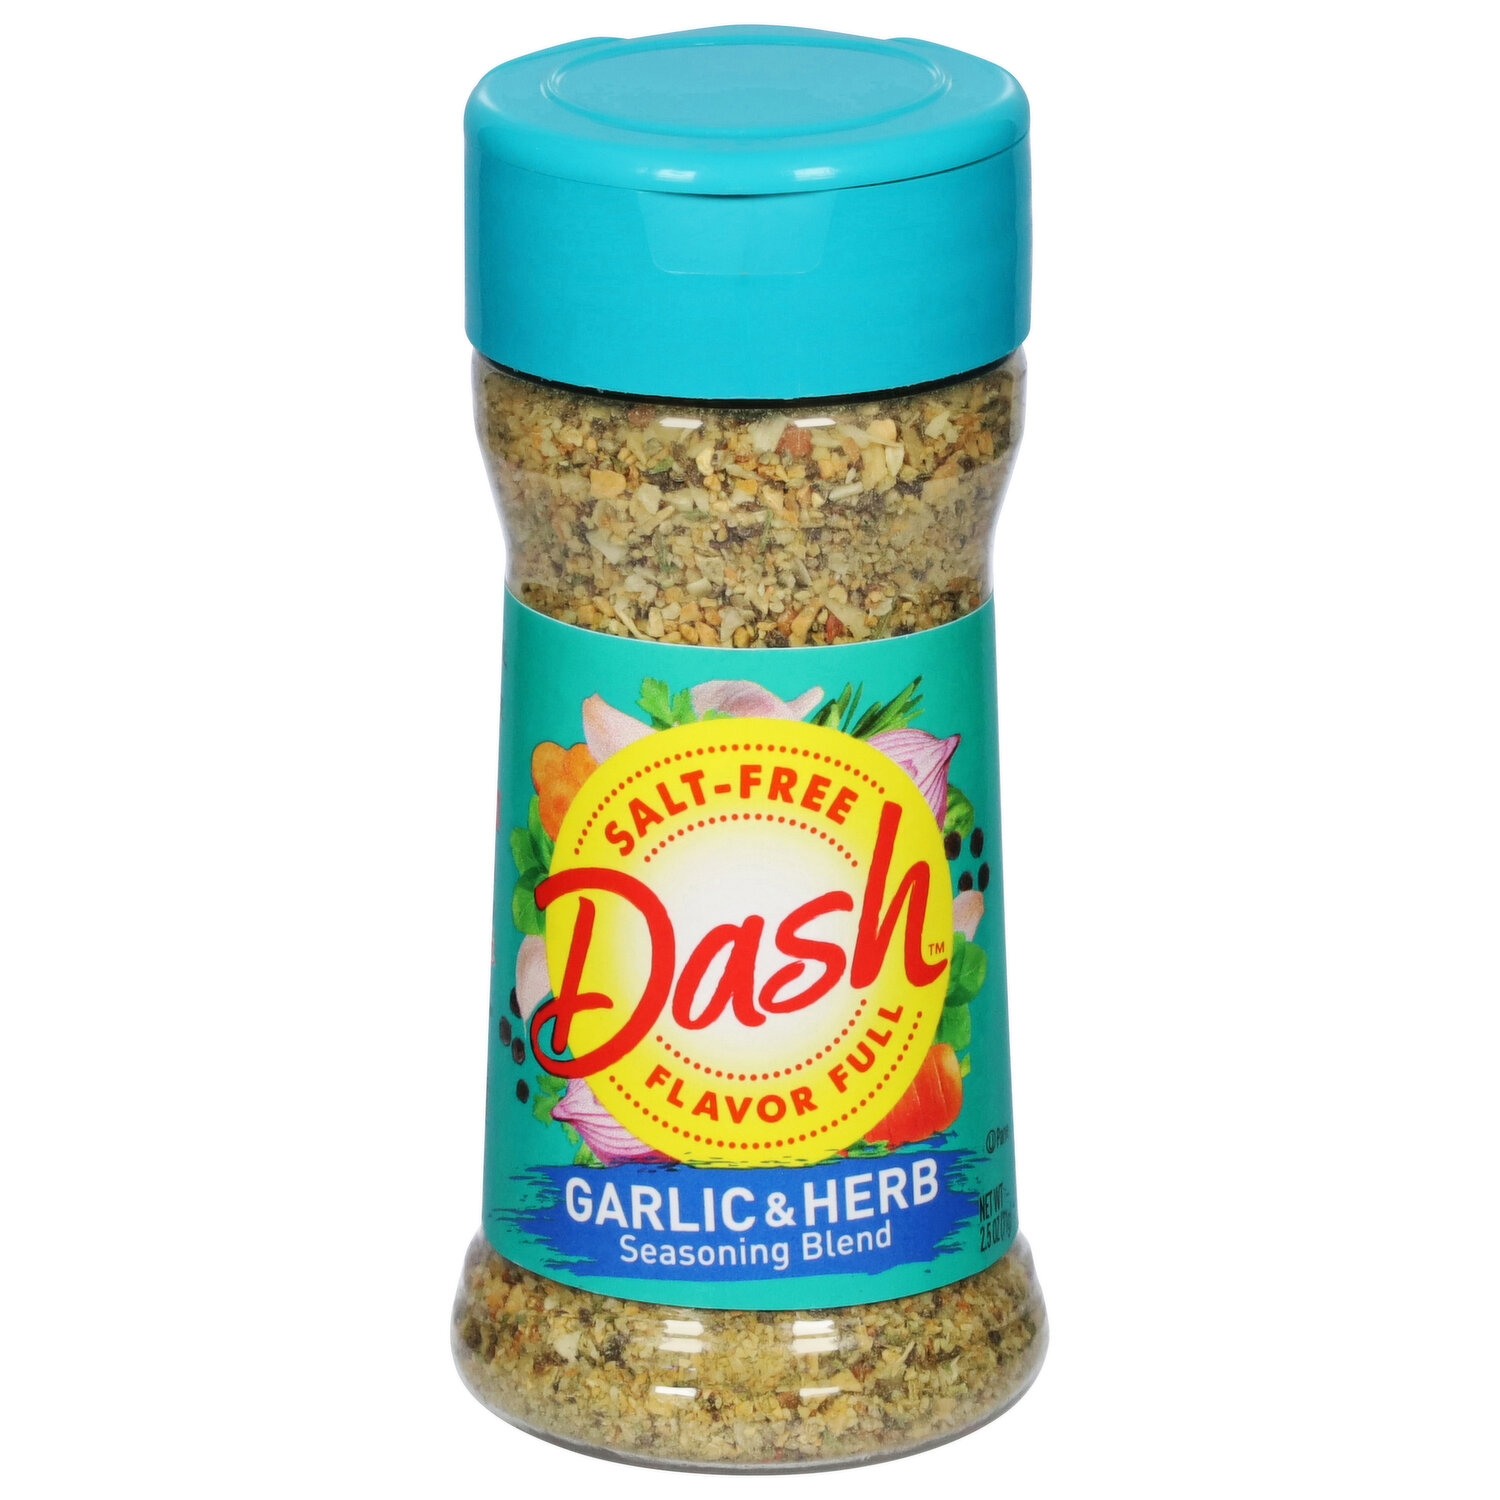 Dash Salt-Free Seasoning Blend, Fiesta Lime, 2.4 Ounce